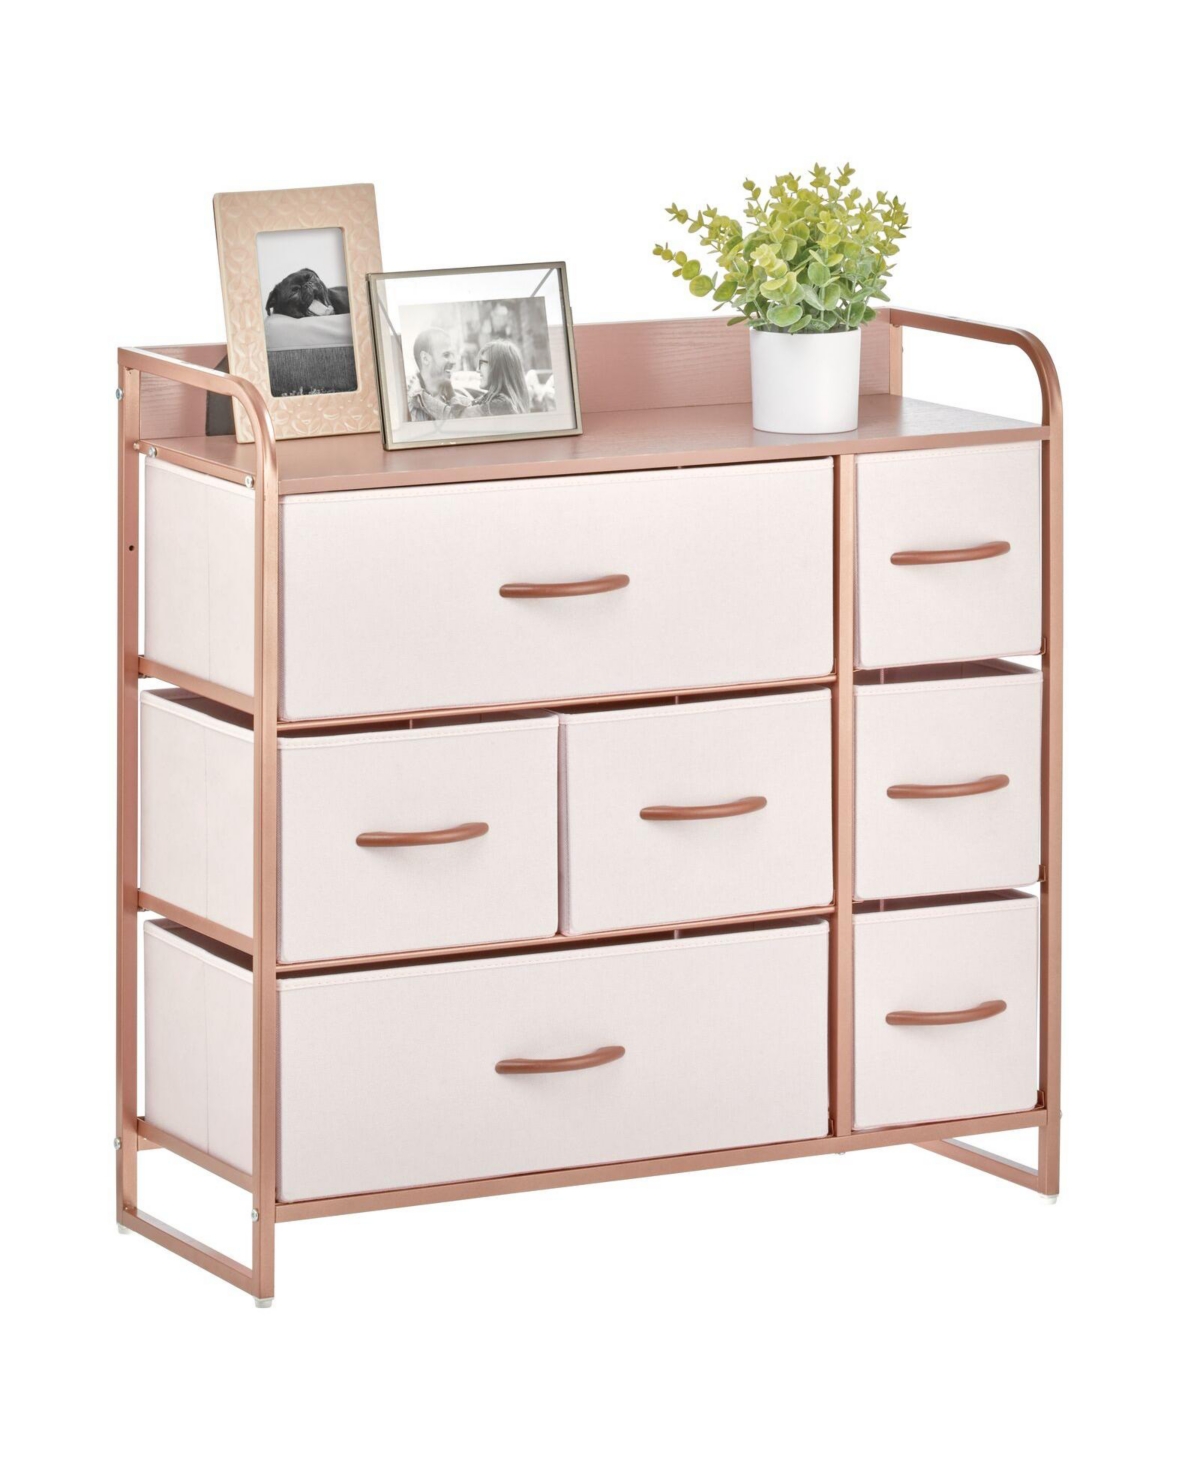 Storage Dresser Furniture, 7 Fabric Drawers - Pink/rose gold